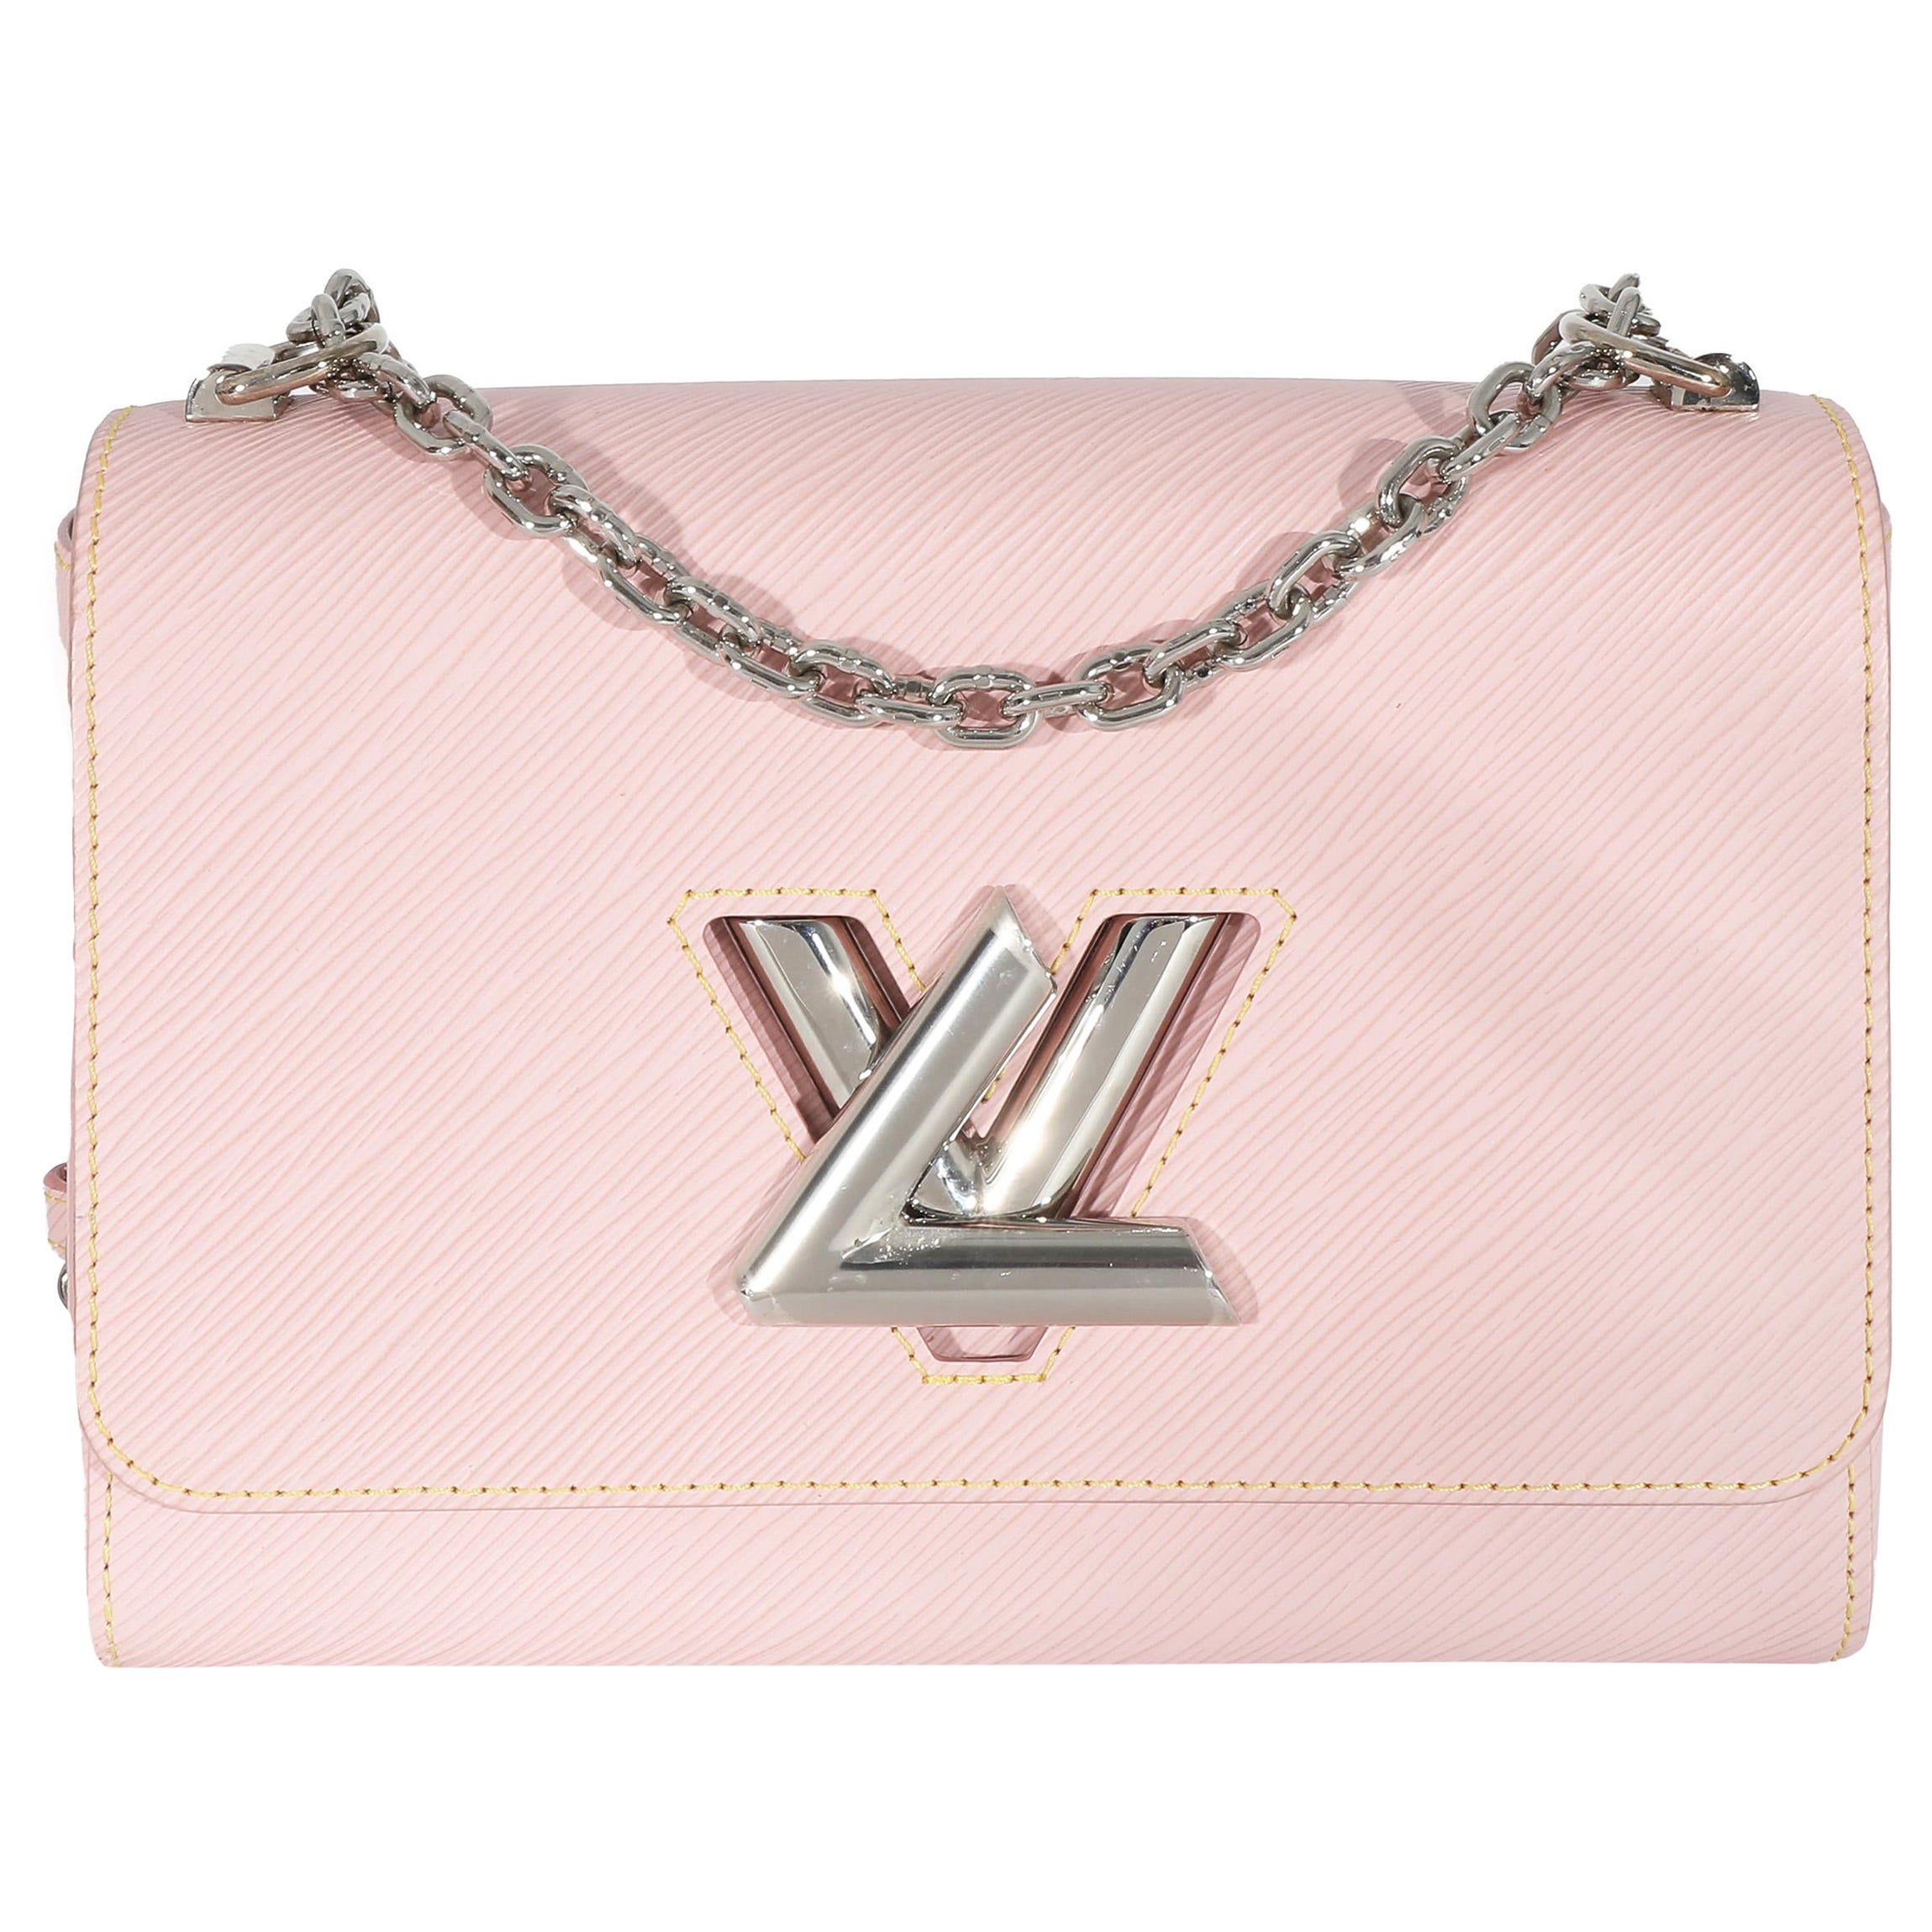 New Rare 22B CHANEL Fuchsia Pink Medium Classic Flap Bag Handbag